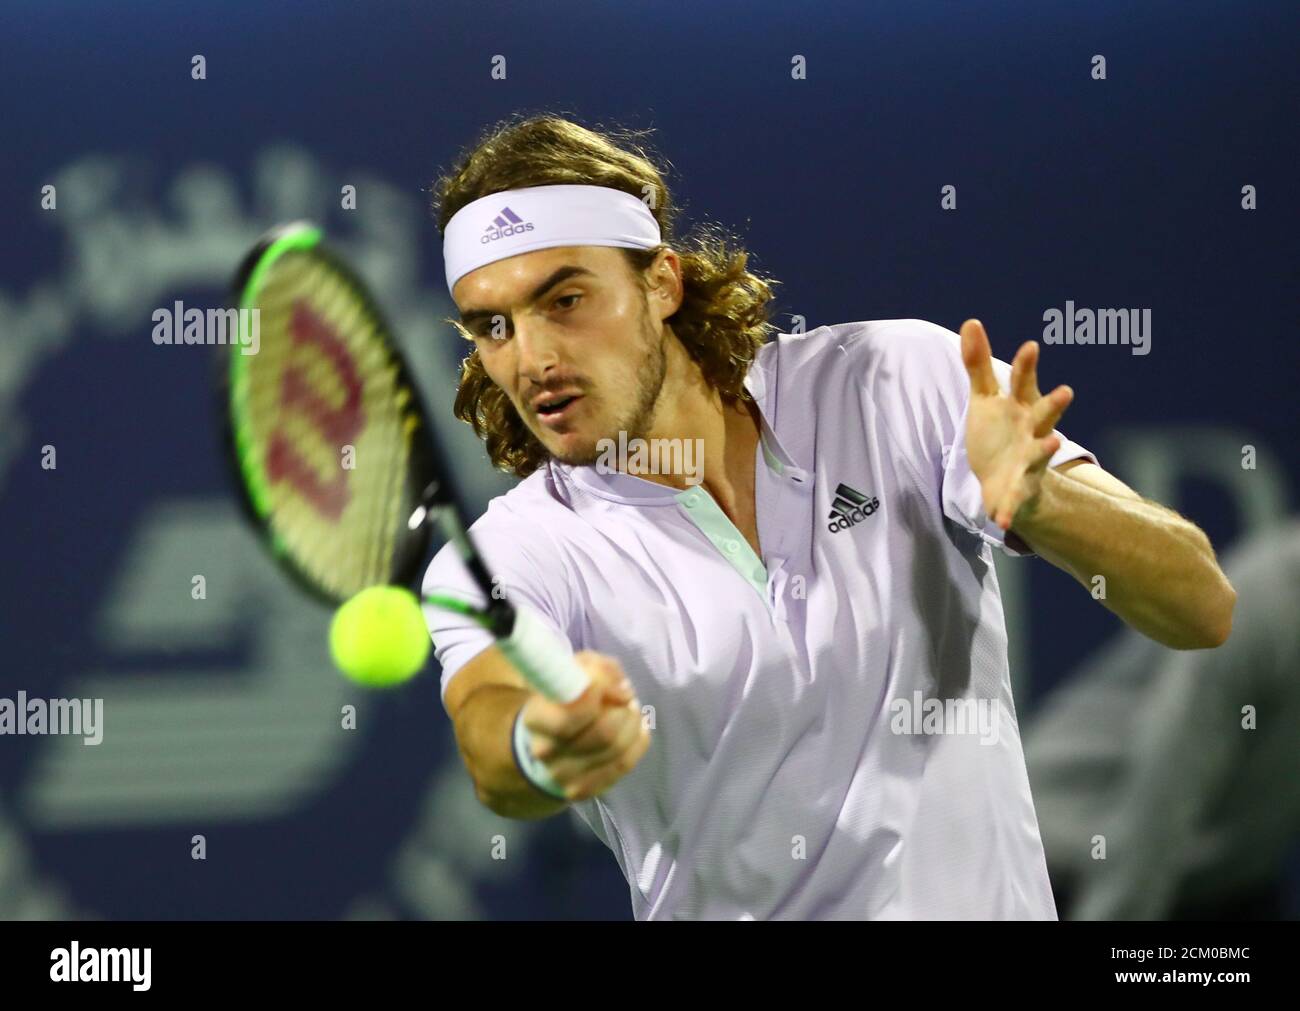 Tennis - ATP 500 - Dubai Tennis Championships - Dubai Duty Free Tennis  Stadium, Dubai, United Arab Emirates - February